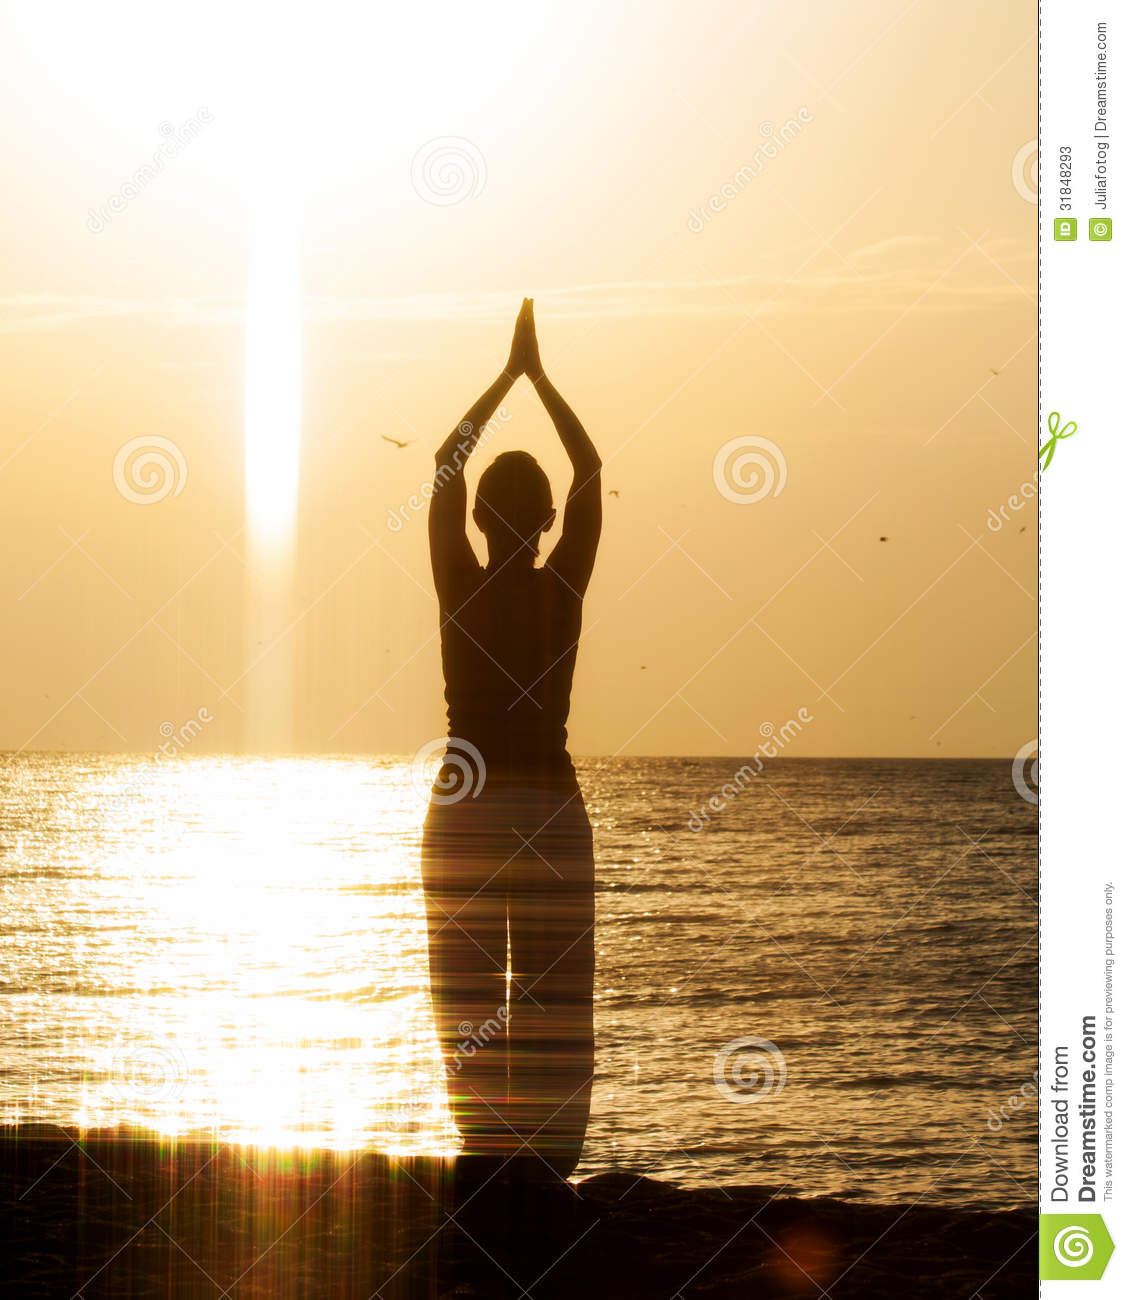 Yoga Quotes About Sun. QuotesGram
